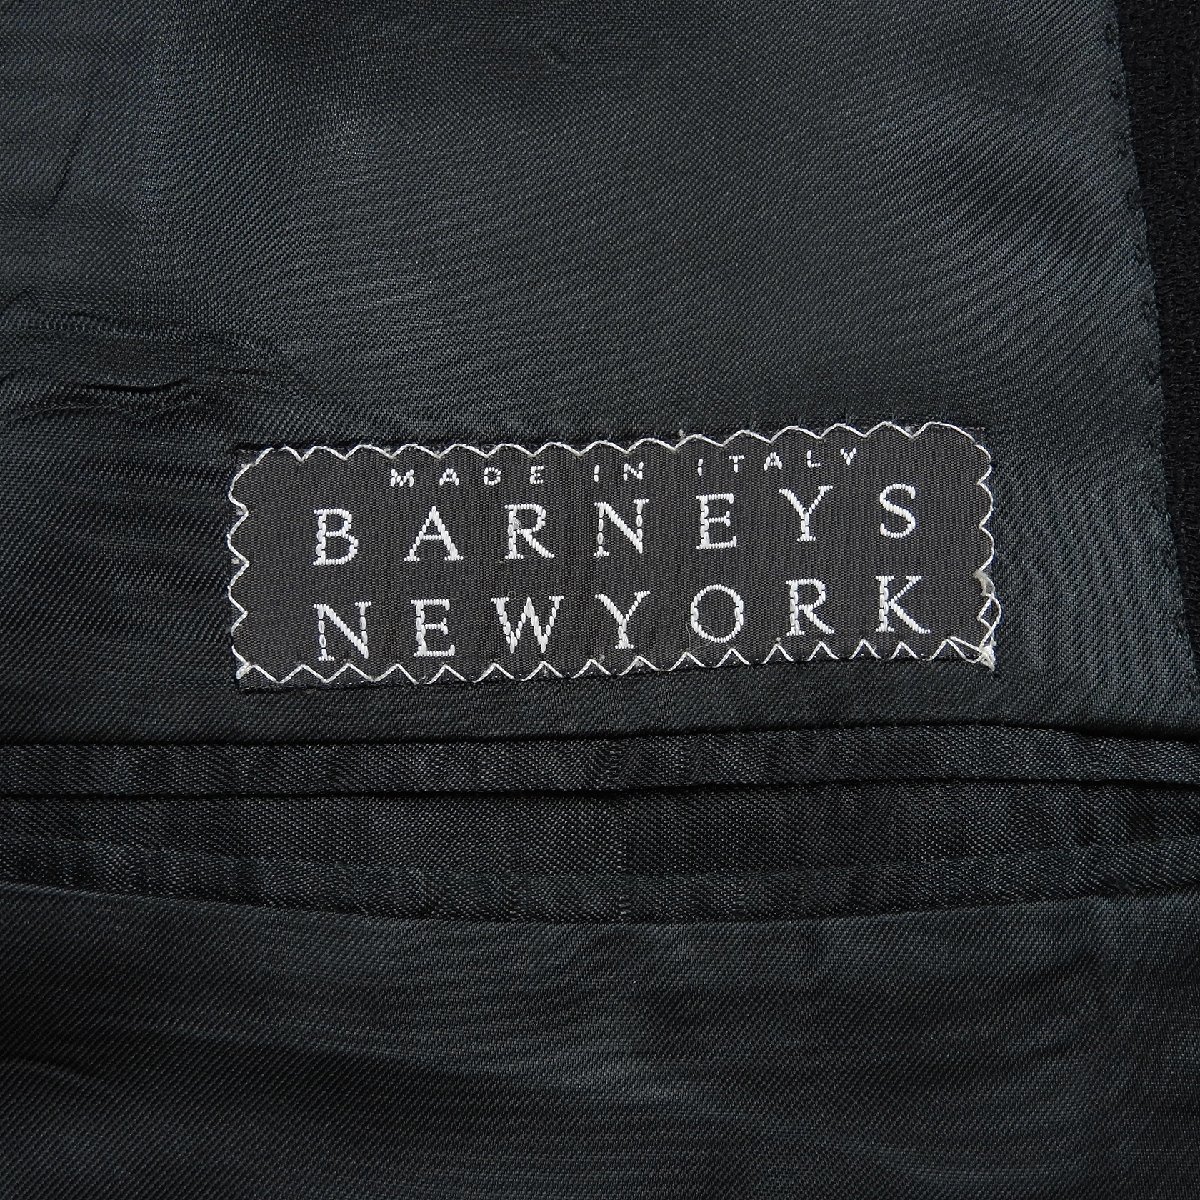 BARNEYS NEW YORK バーニーズニューヨーク 3B スーツ #17174 ビジネス ドレス テーラード スラックス_画像4